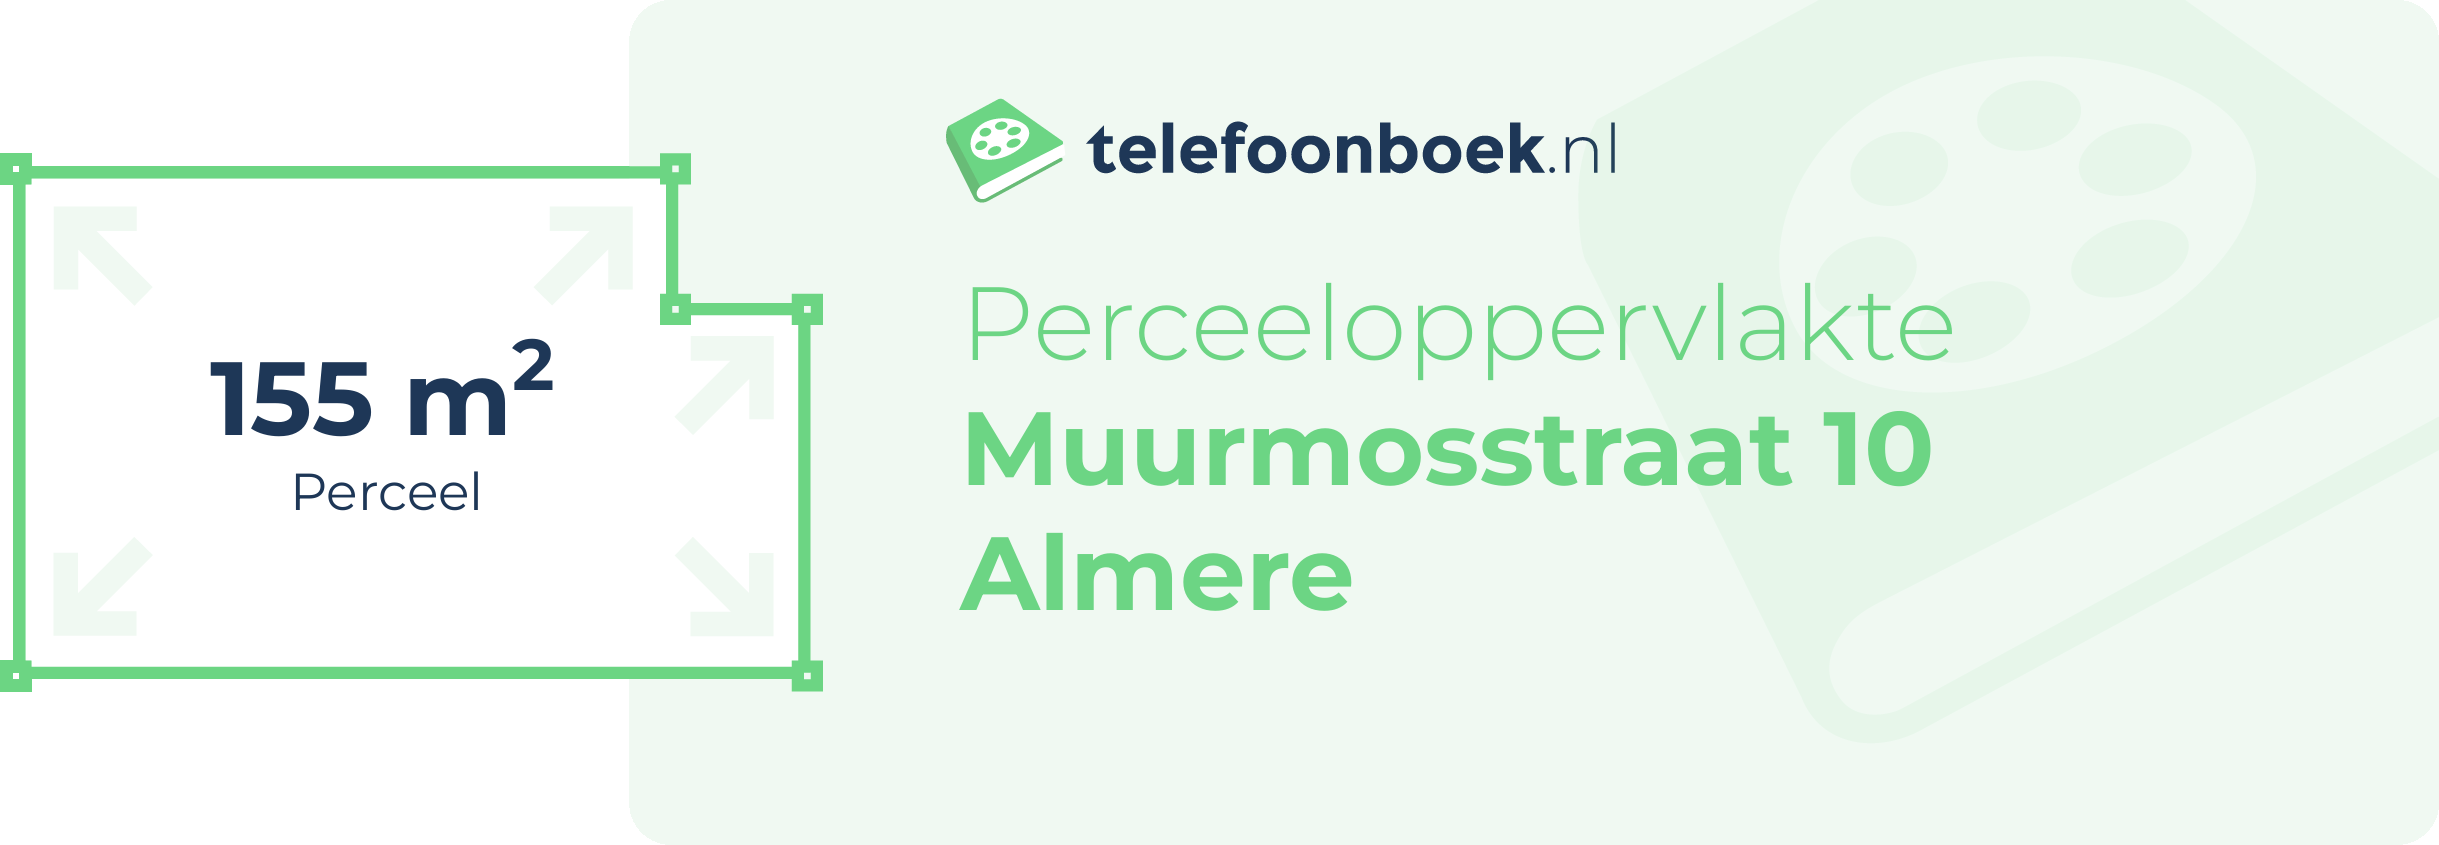 Perceeloppervlakte Muurmosstraat 10 Almere